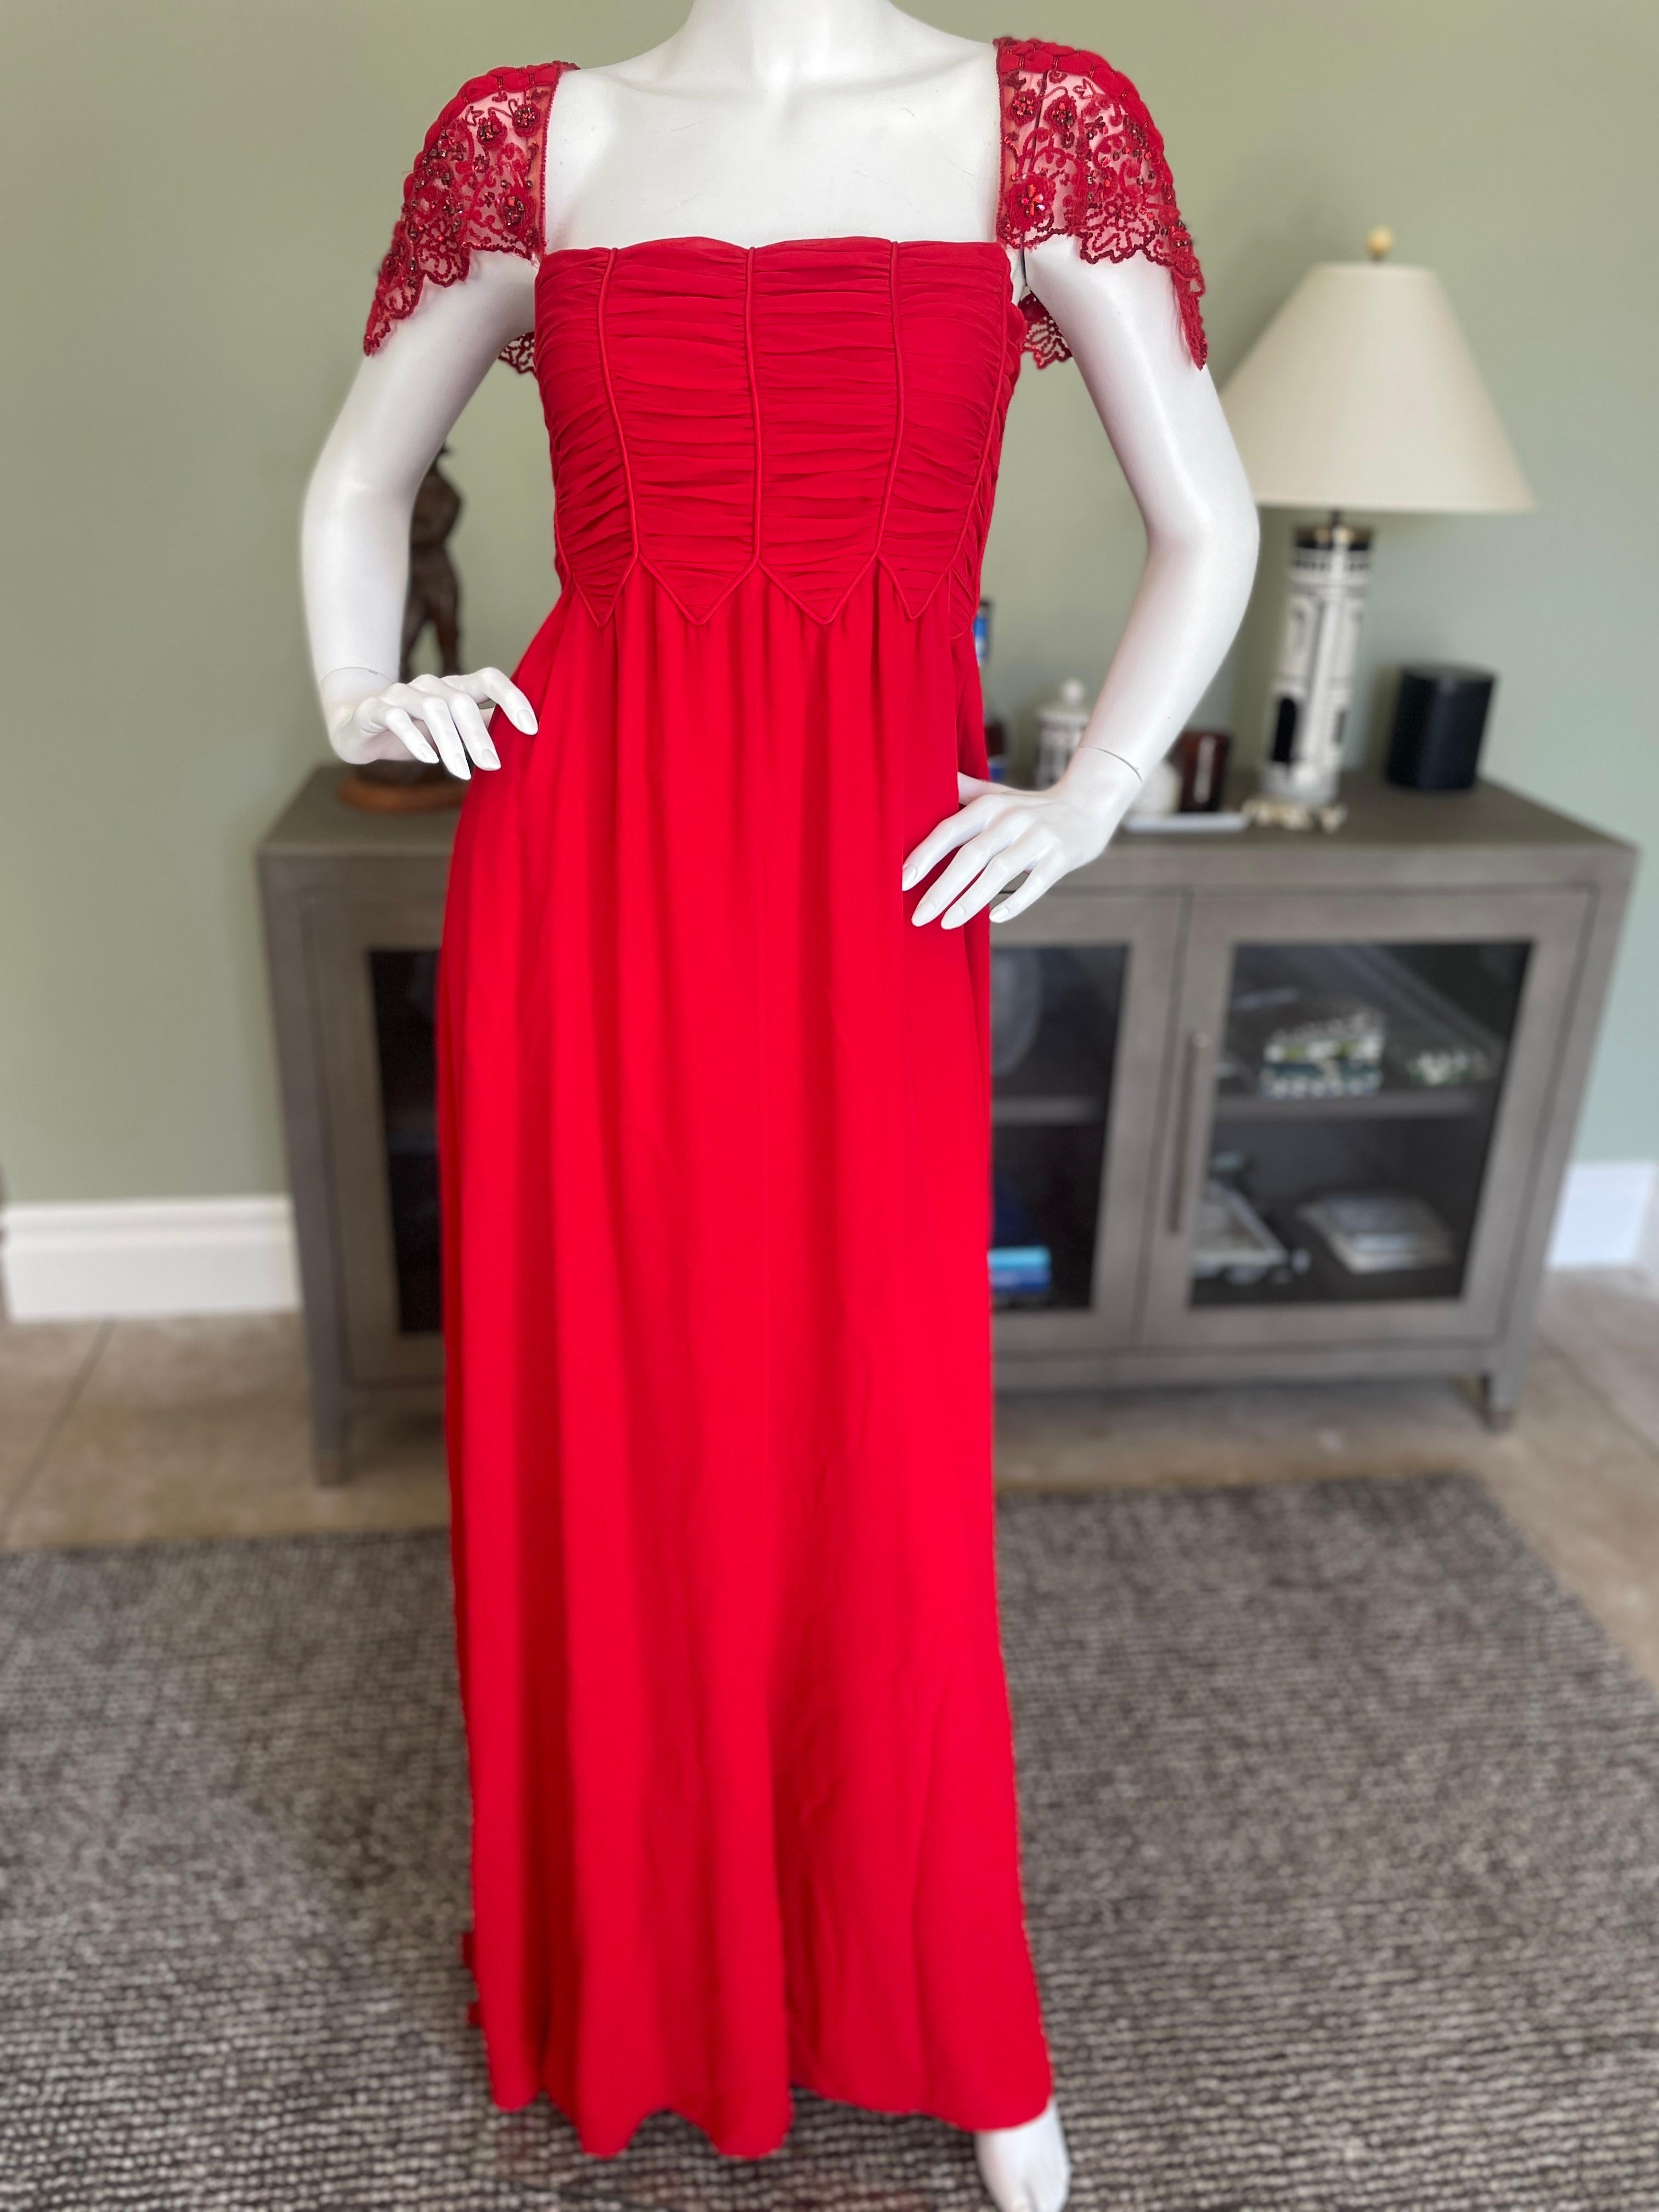 Valentino Vintage 90's Red Silk Evening Dress with Embellished Shoulders.
Size 6
 Bust 34